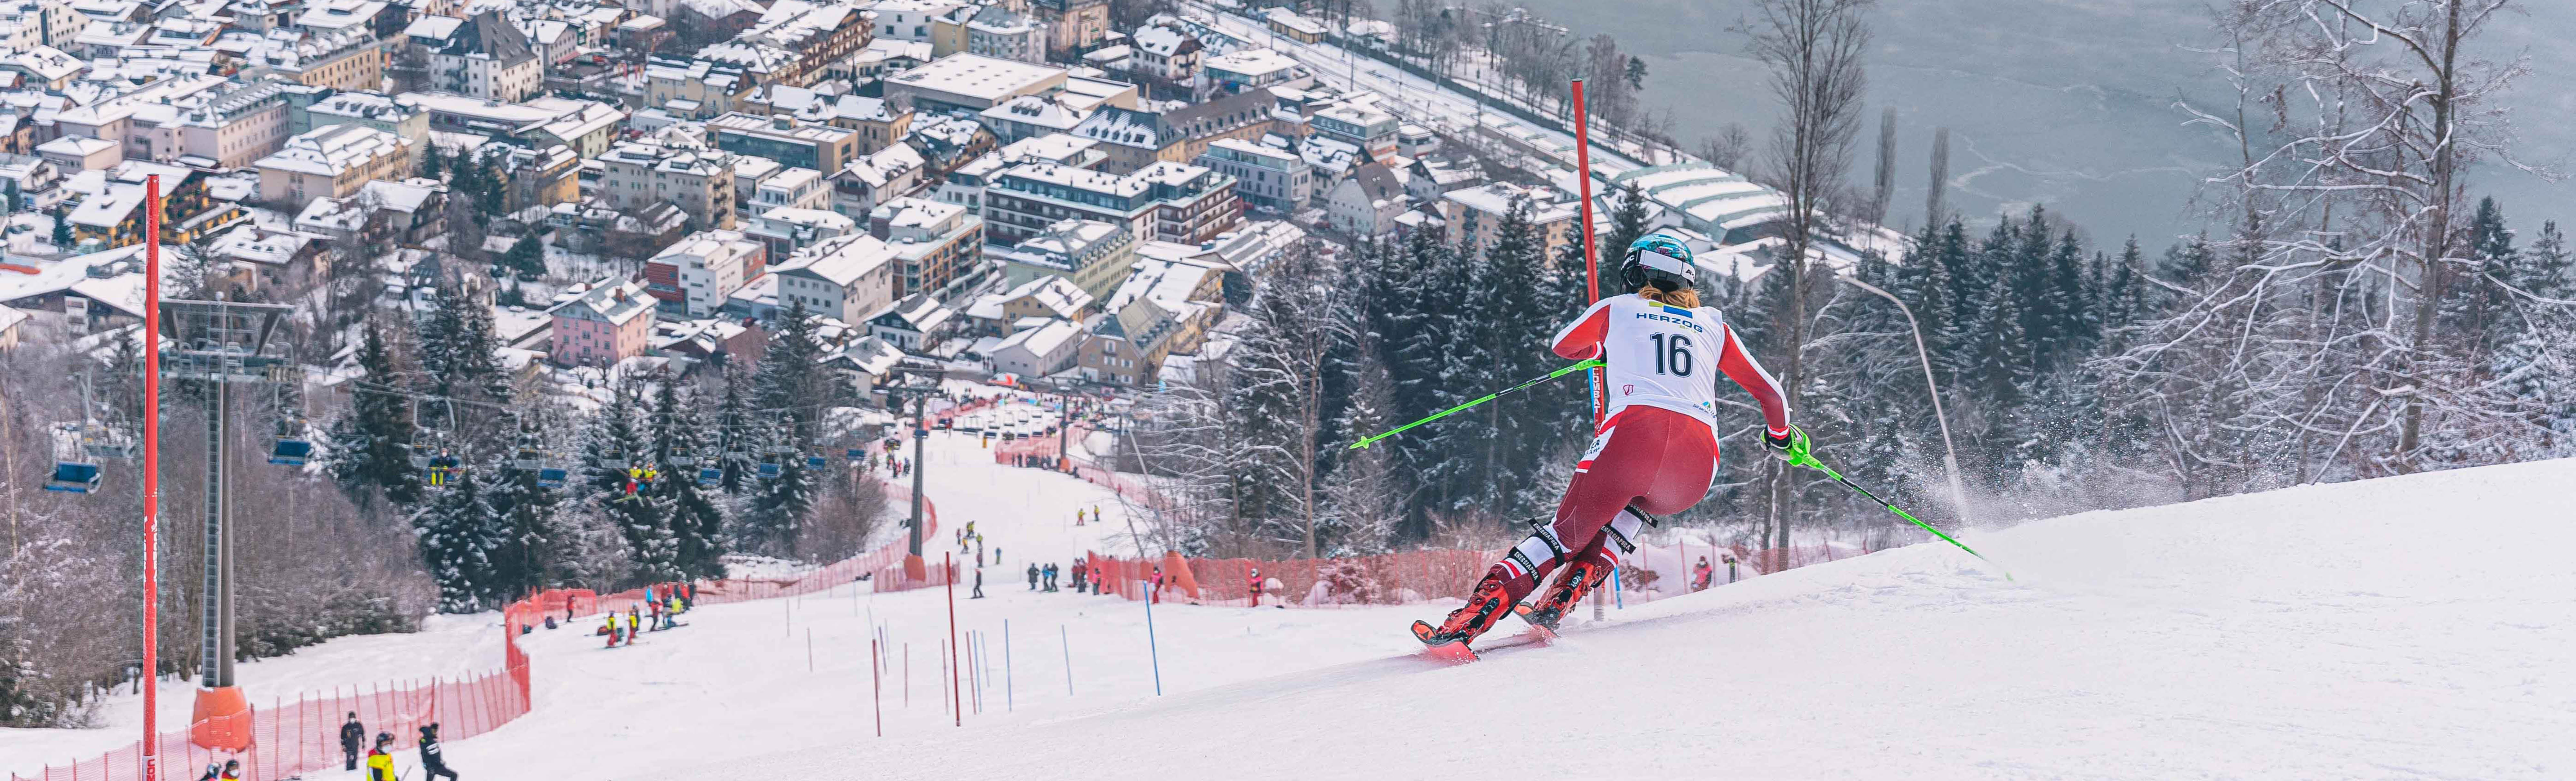 FIS Europacup Damen Slalom Schmitten in Zell am See